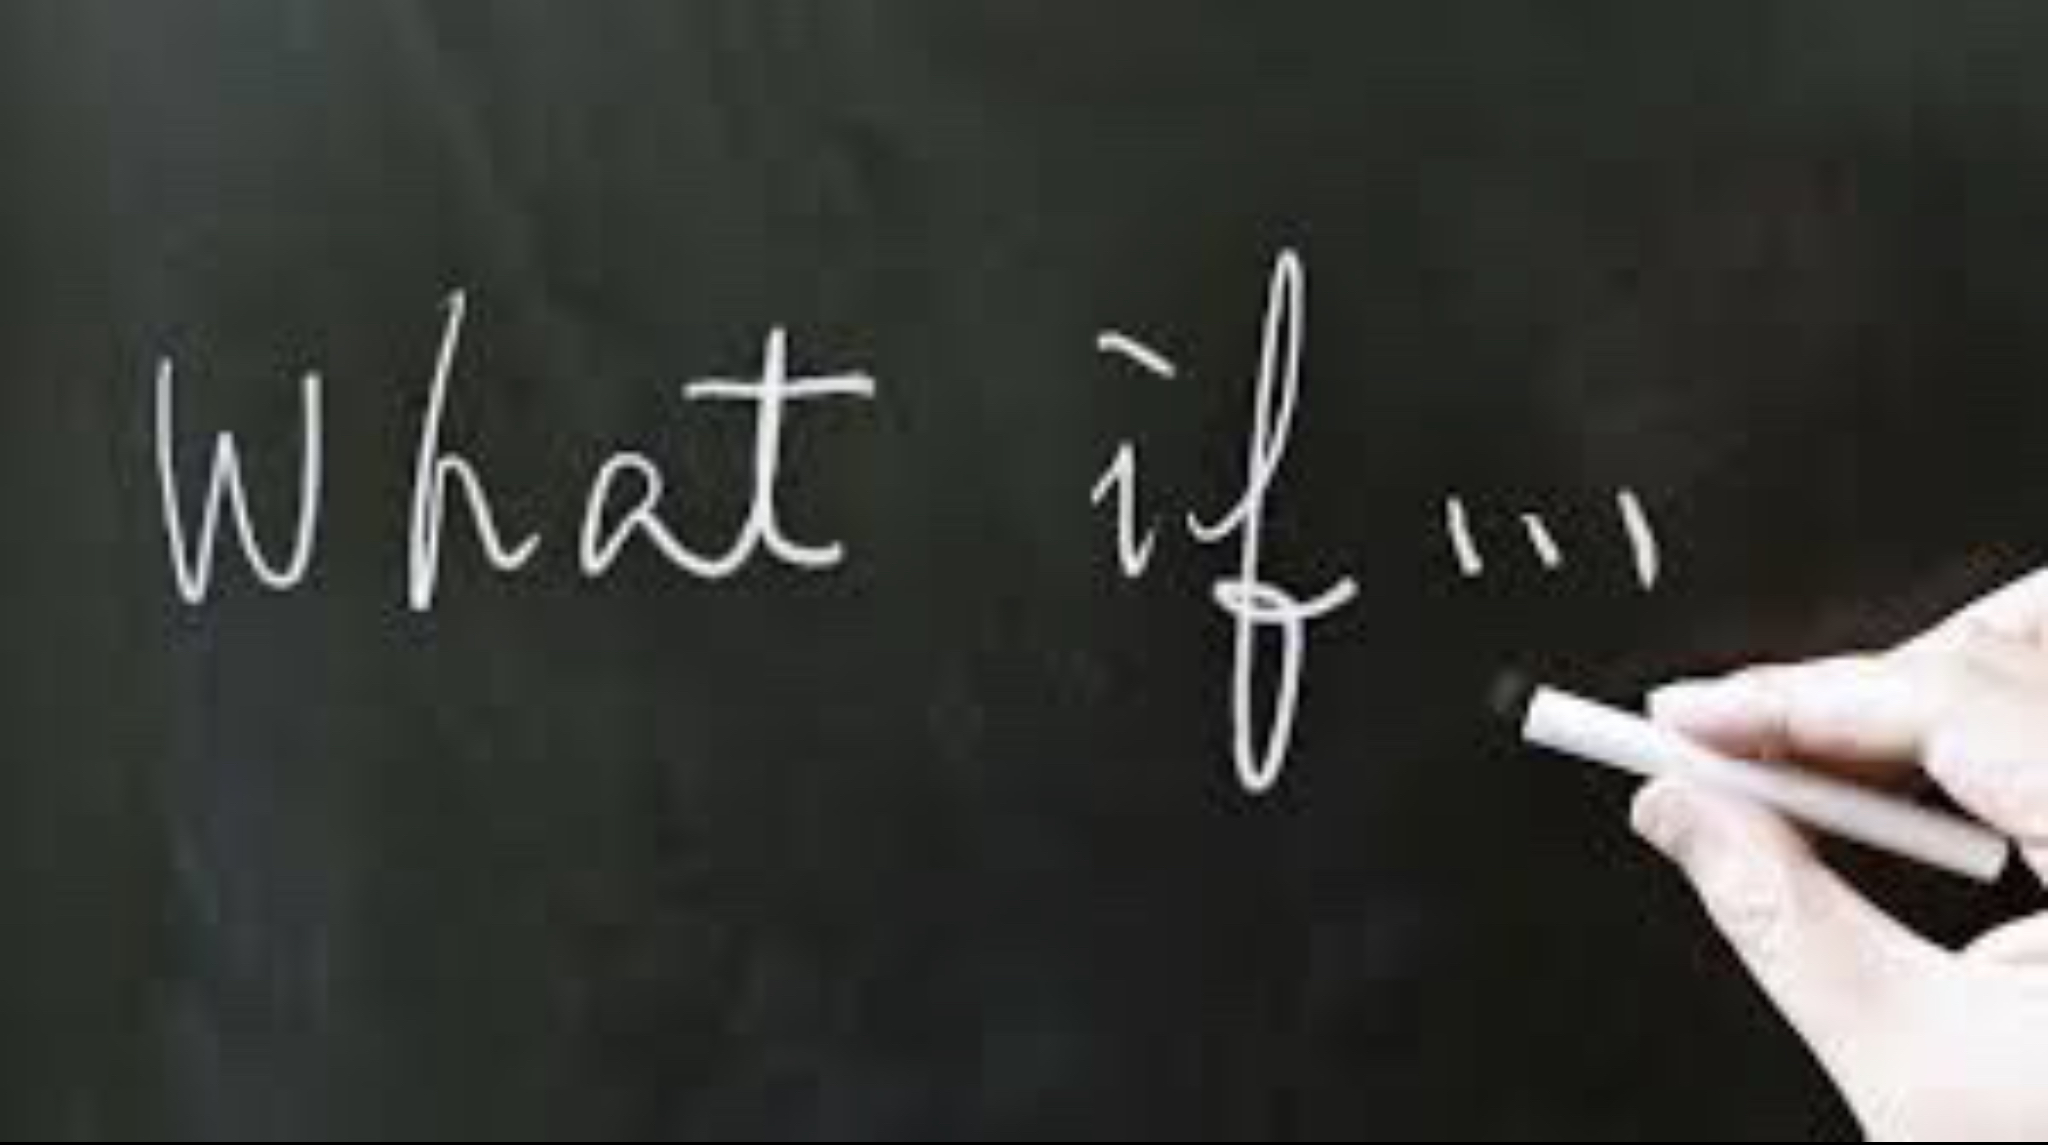 Blackboard - "What If"